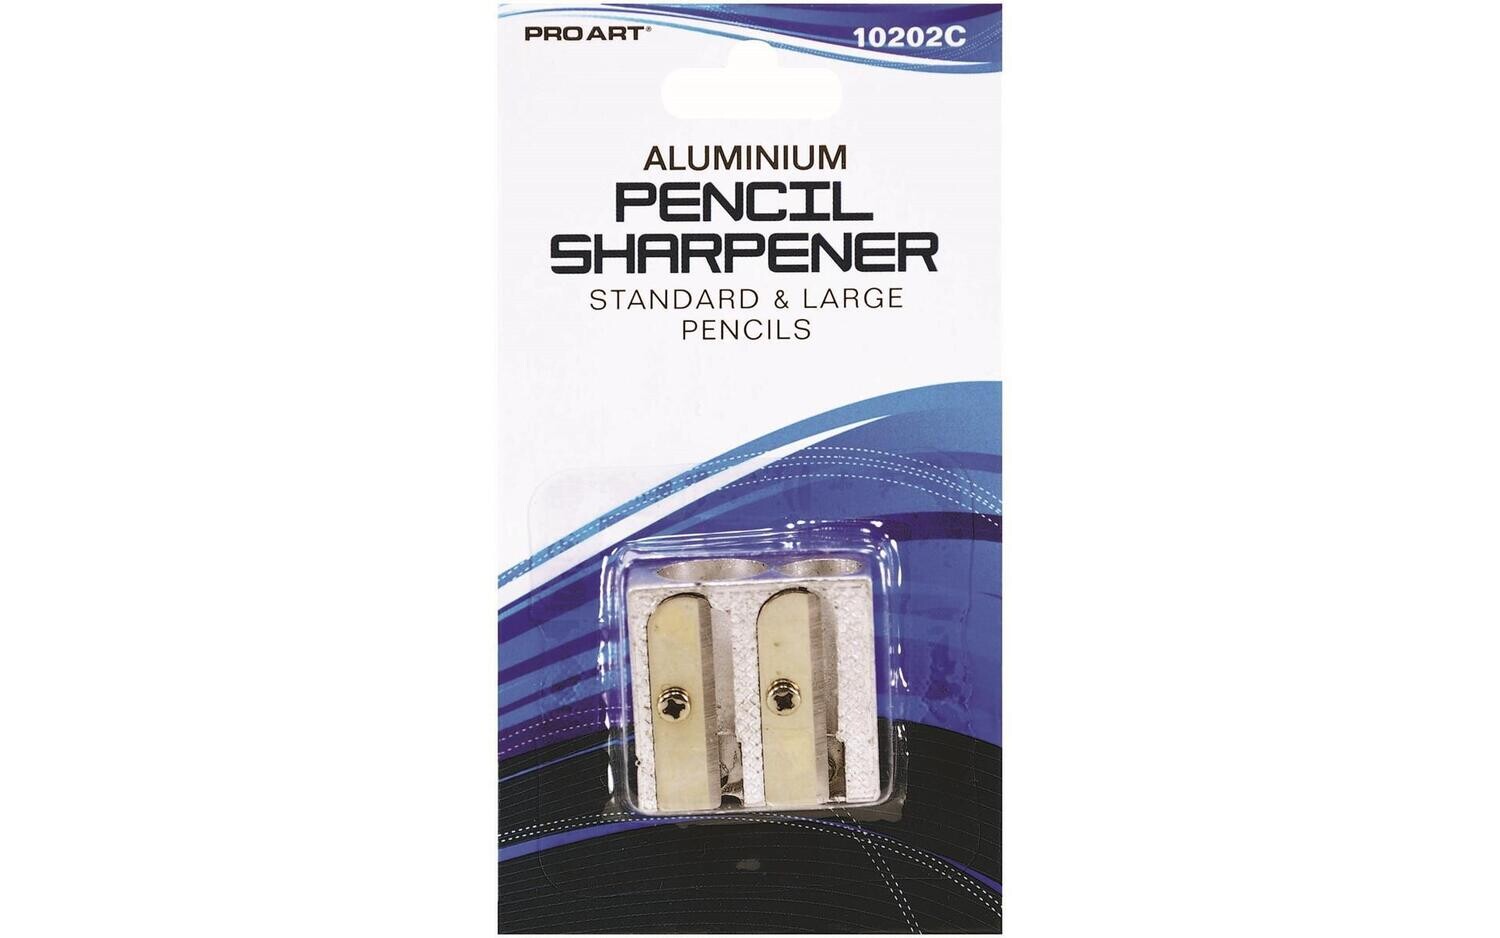 Pro Art Aluminum Double Pencil Sharpener